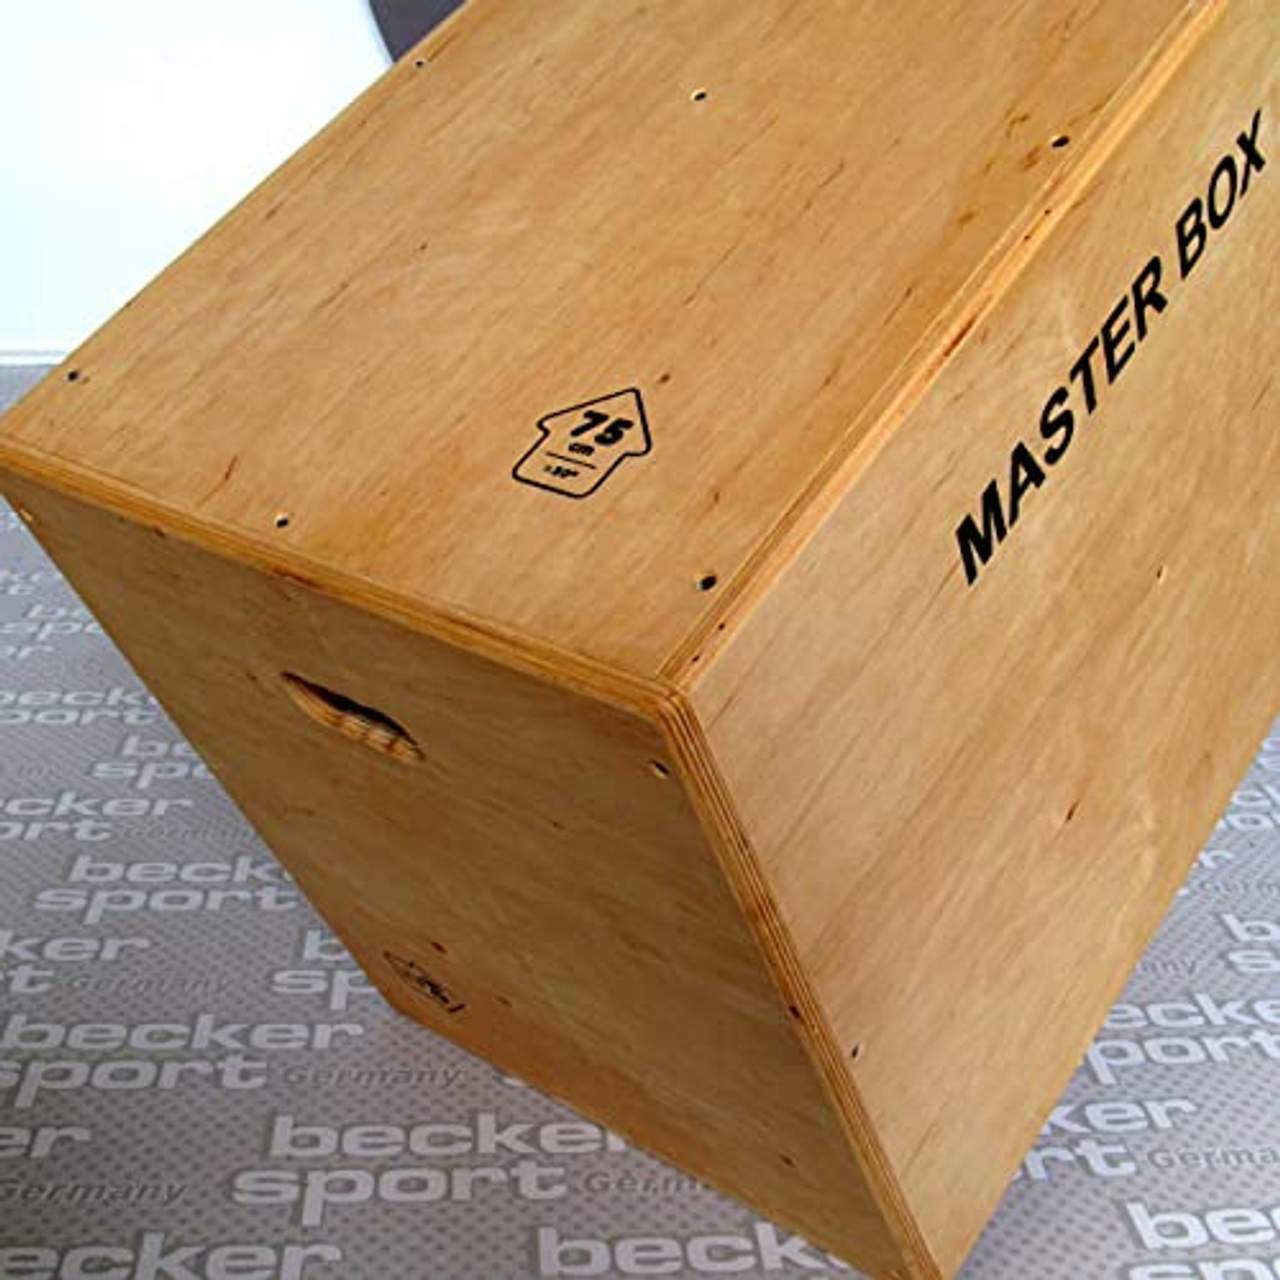 Becker-Sport Germany Master Box Standard